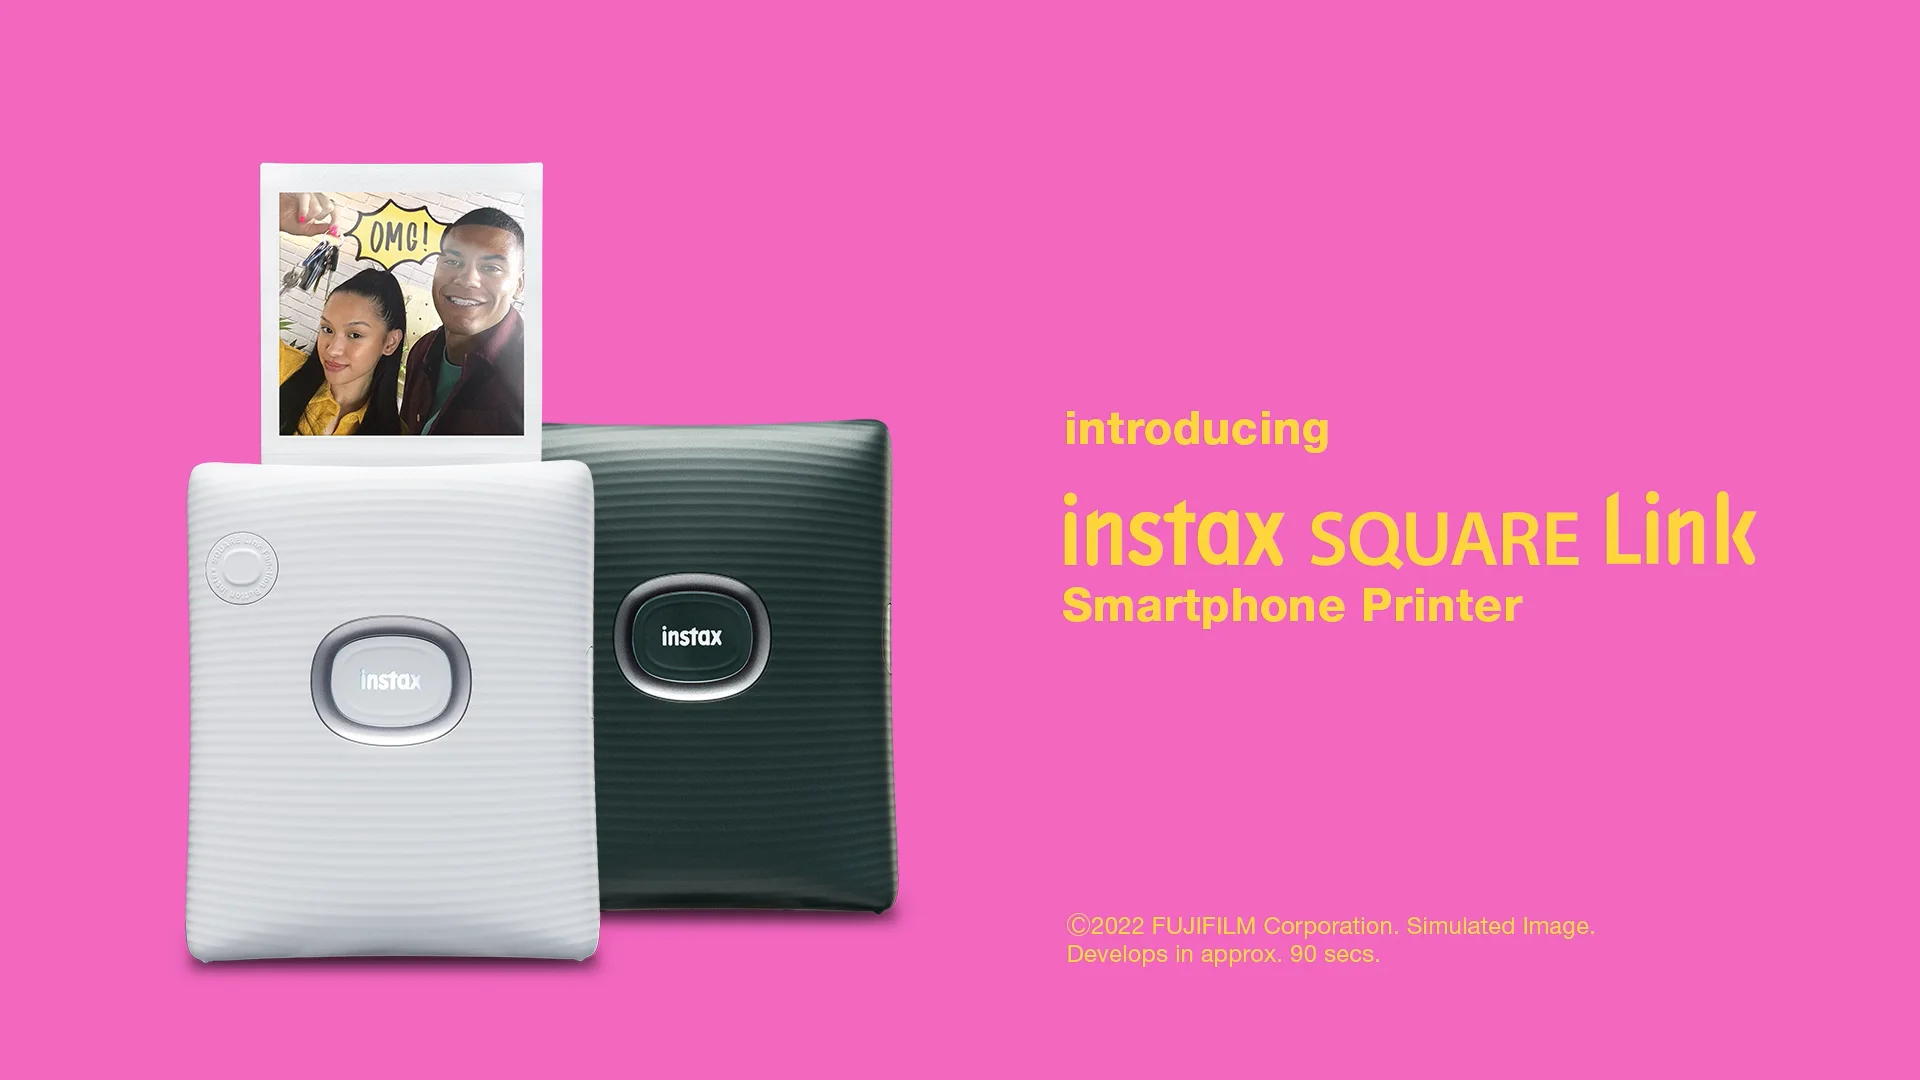 Fujifilm Instax Square Link Smartphone Printer